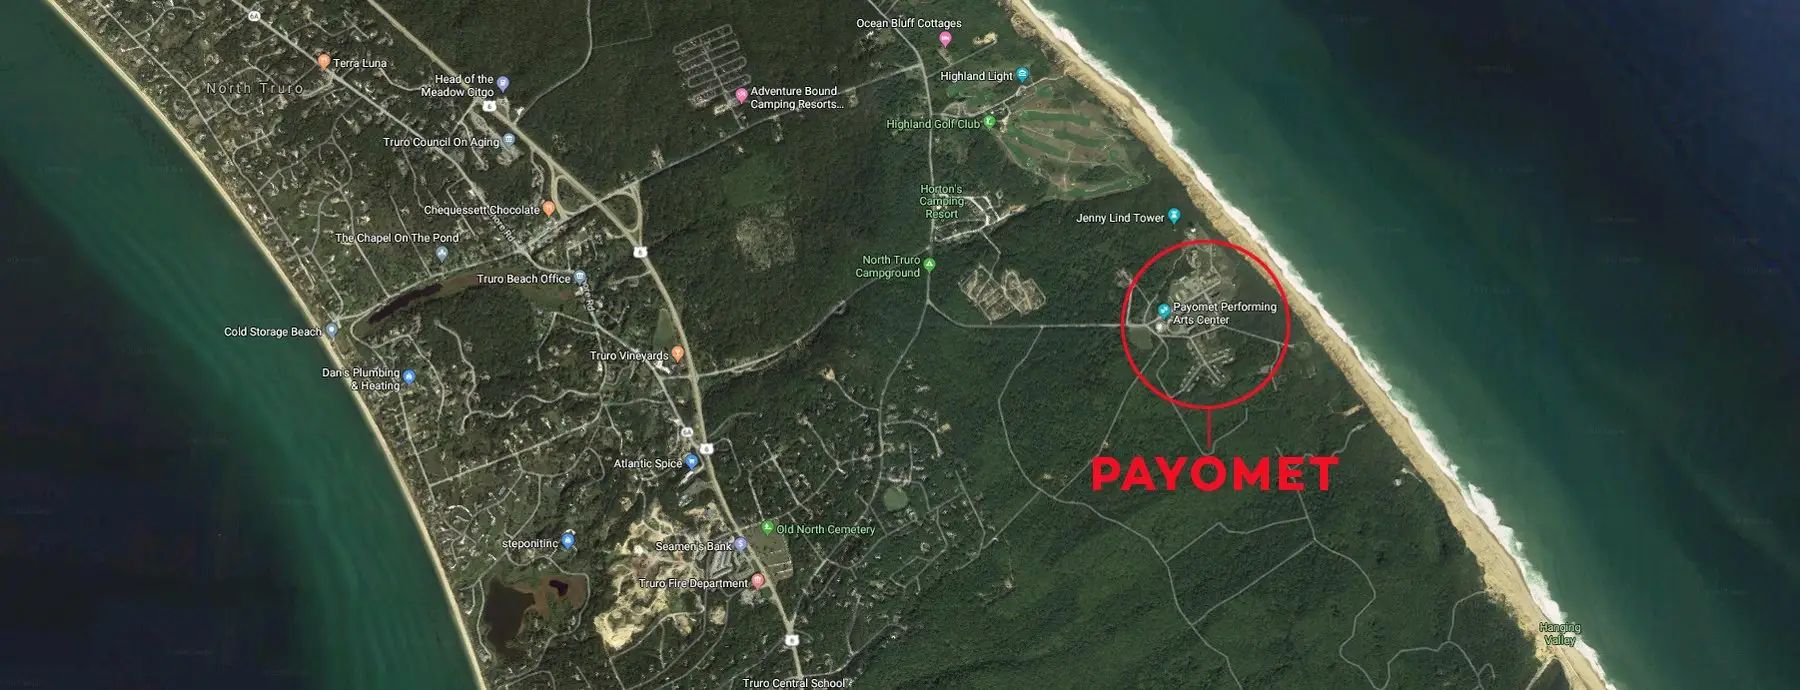 Payomet Map Location